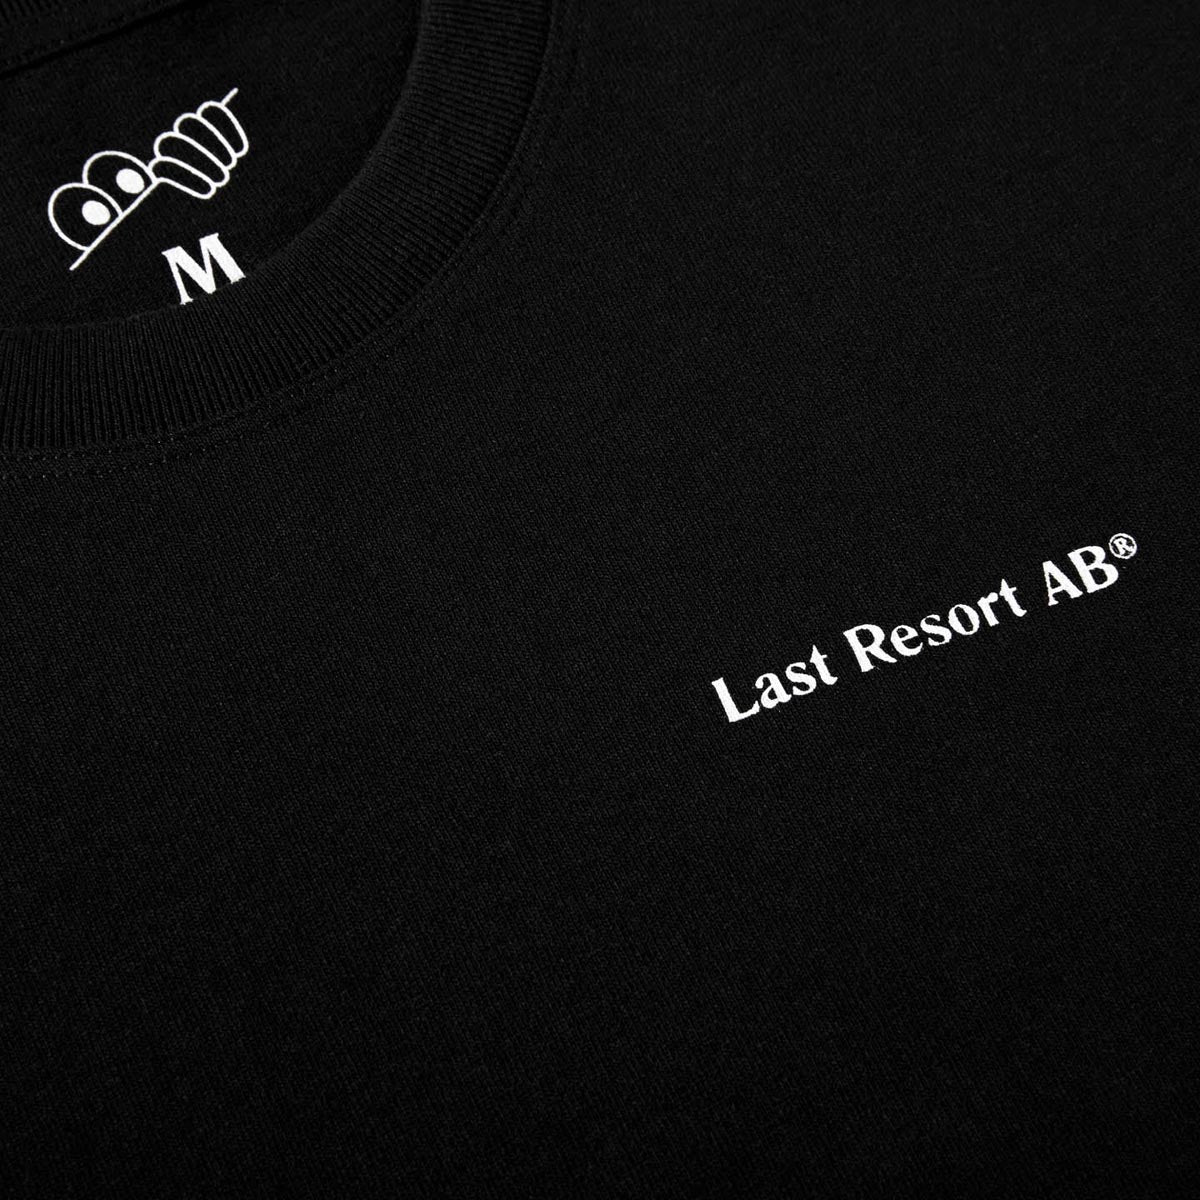 Last Resort AB LRAB Script T-Shirt - Black image 2